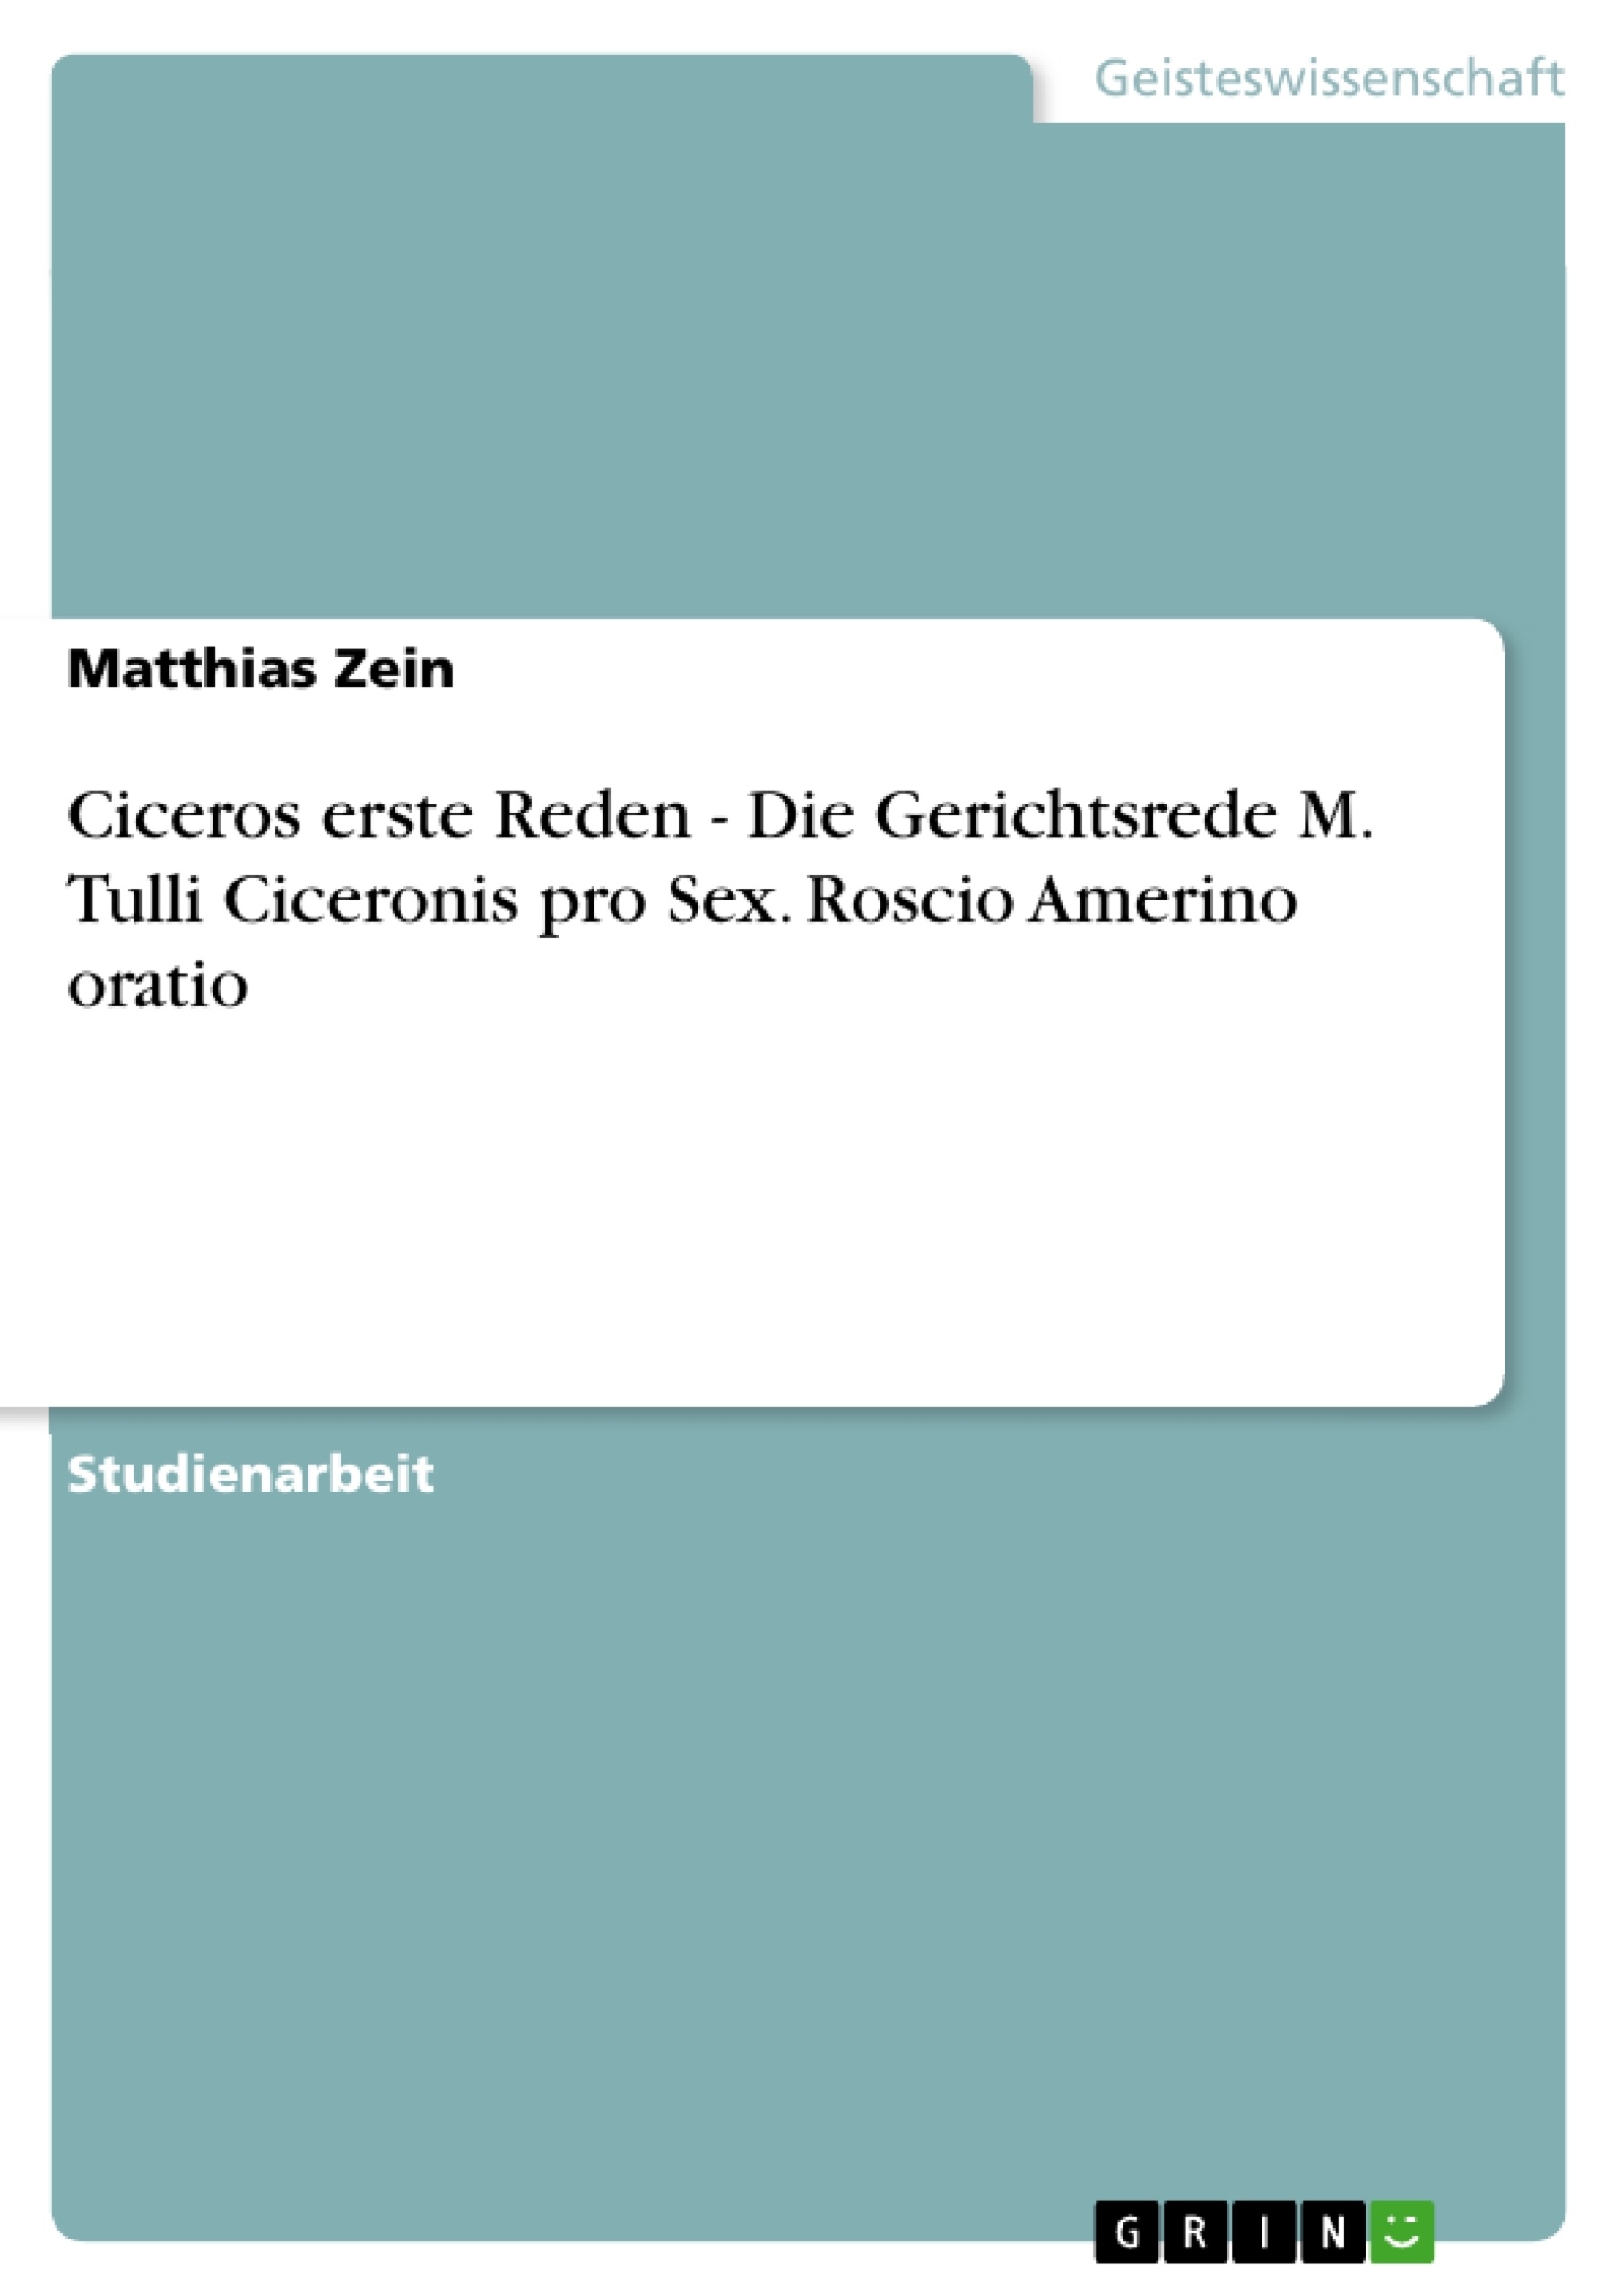 Title: Ciceros erste Reden - Die Gerichtsrede M. Tulli Ciceronis pro Sex. Roscio Amerino oratio